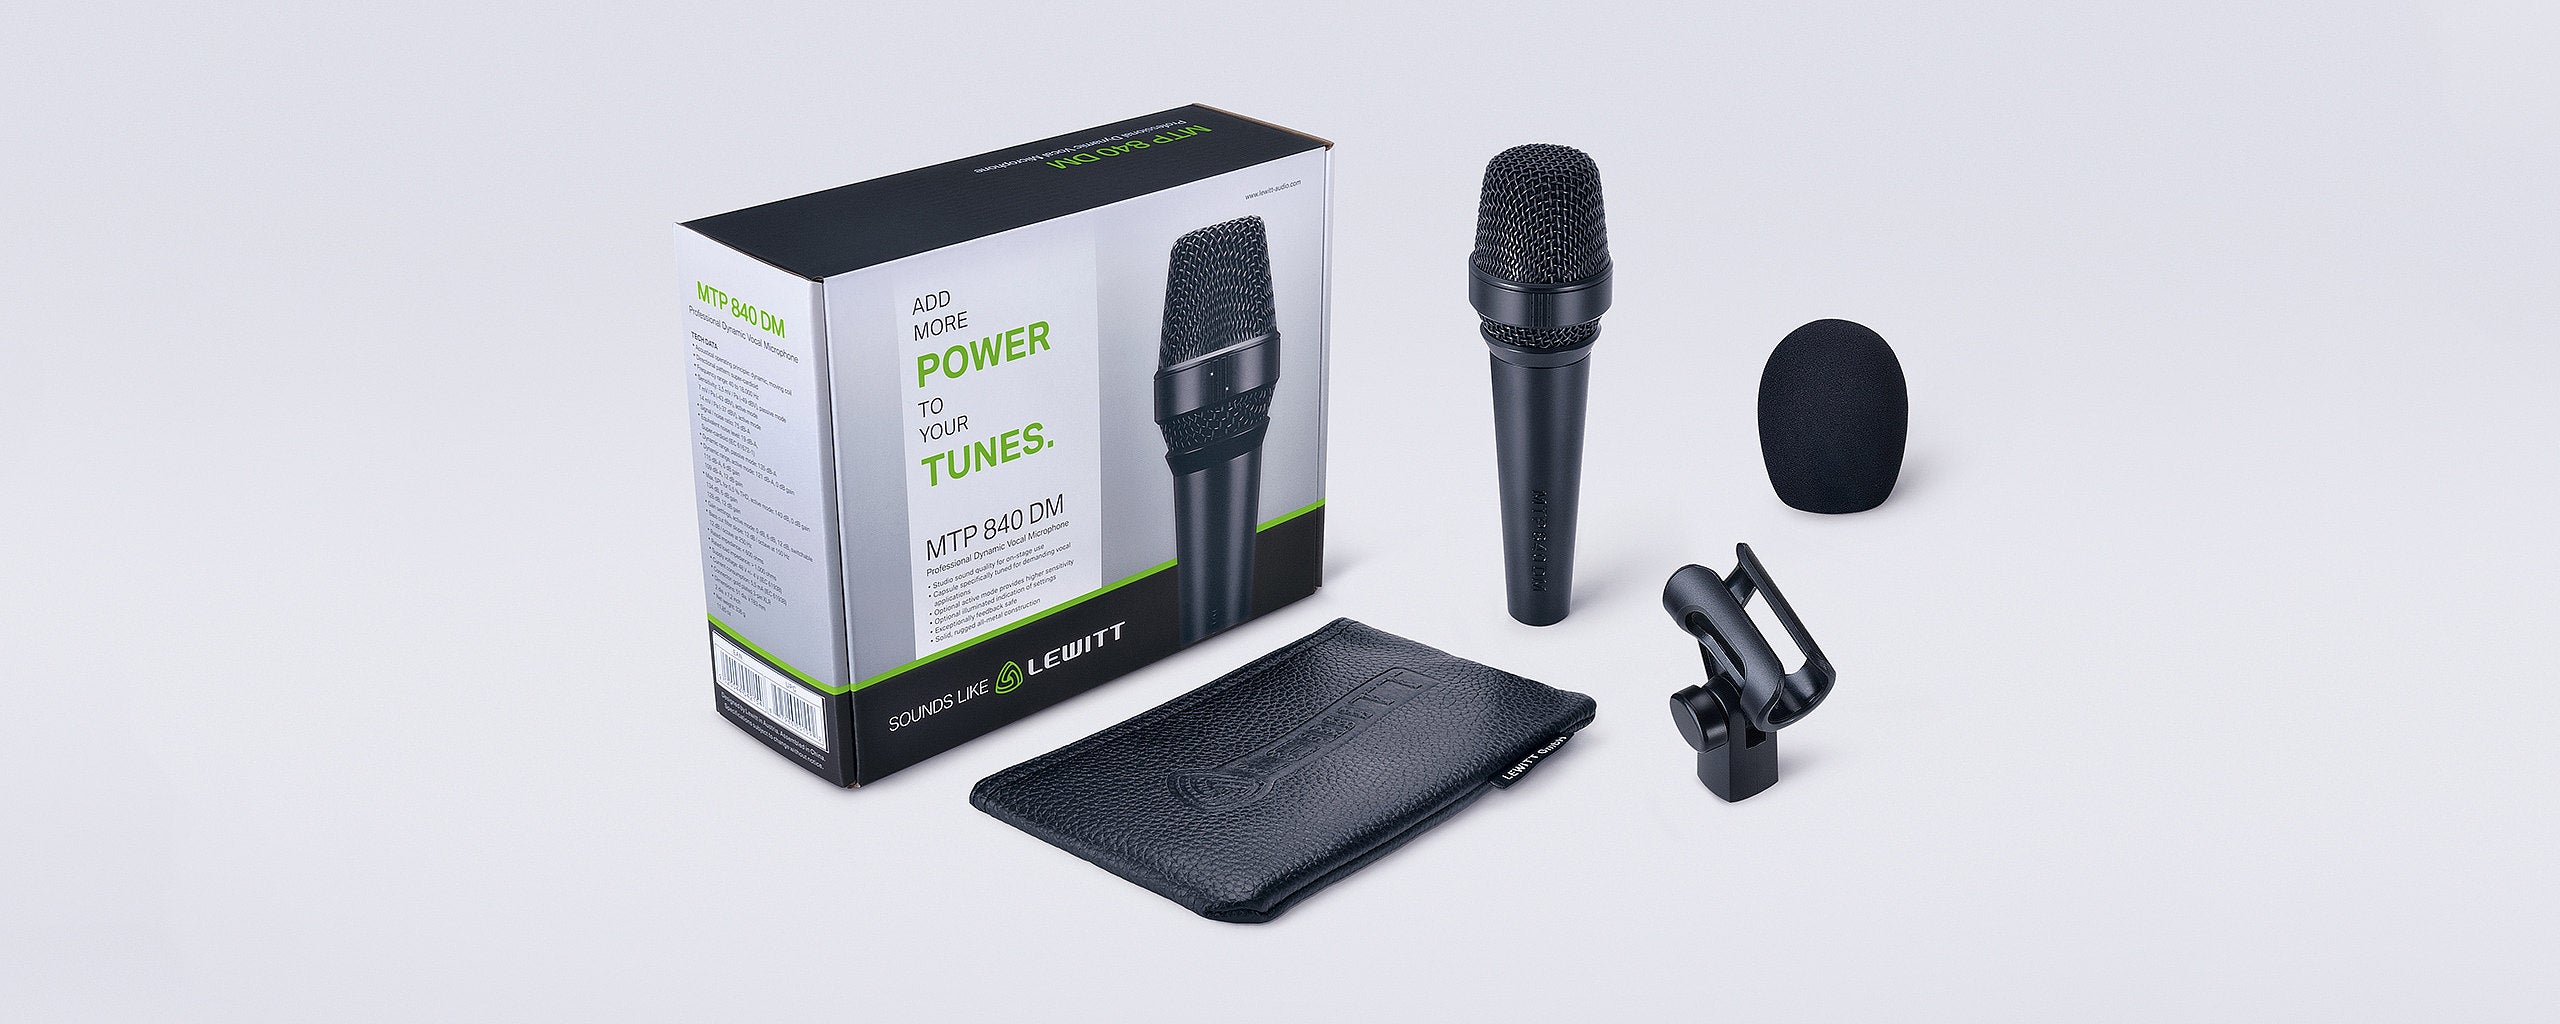 Lewitt MTP 840 DM Dynamic Microphone - Microphones - Professional Audio Design, Inc